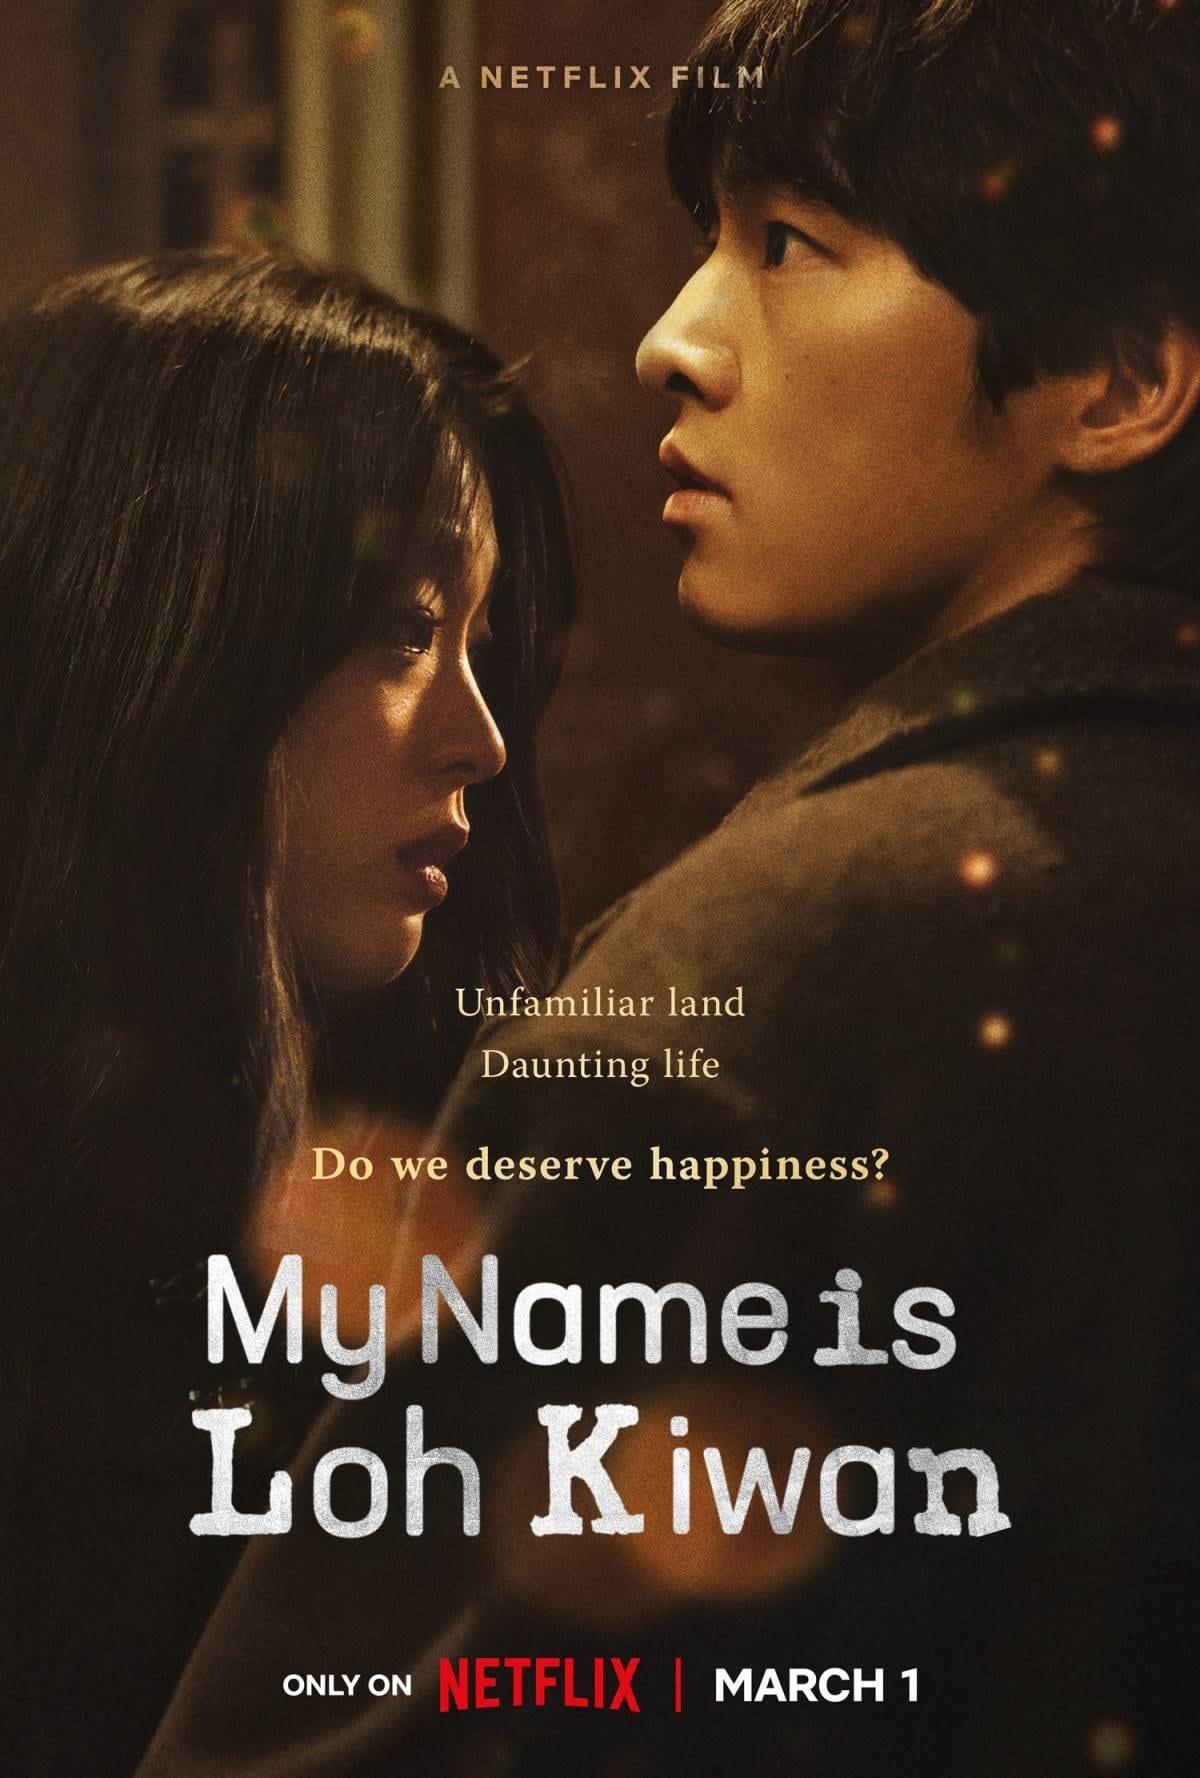 My Name Is Loh Kiwan poster